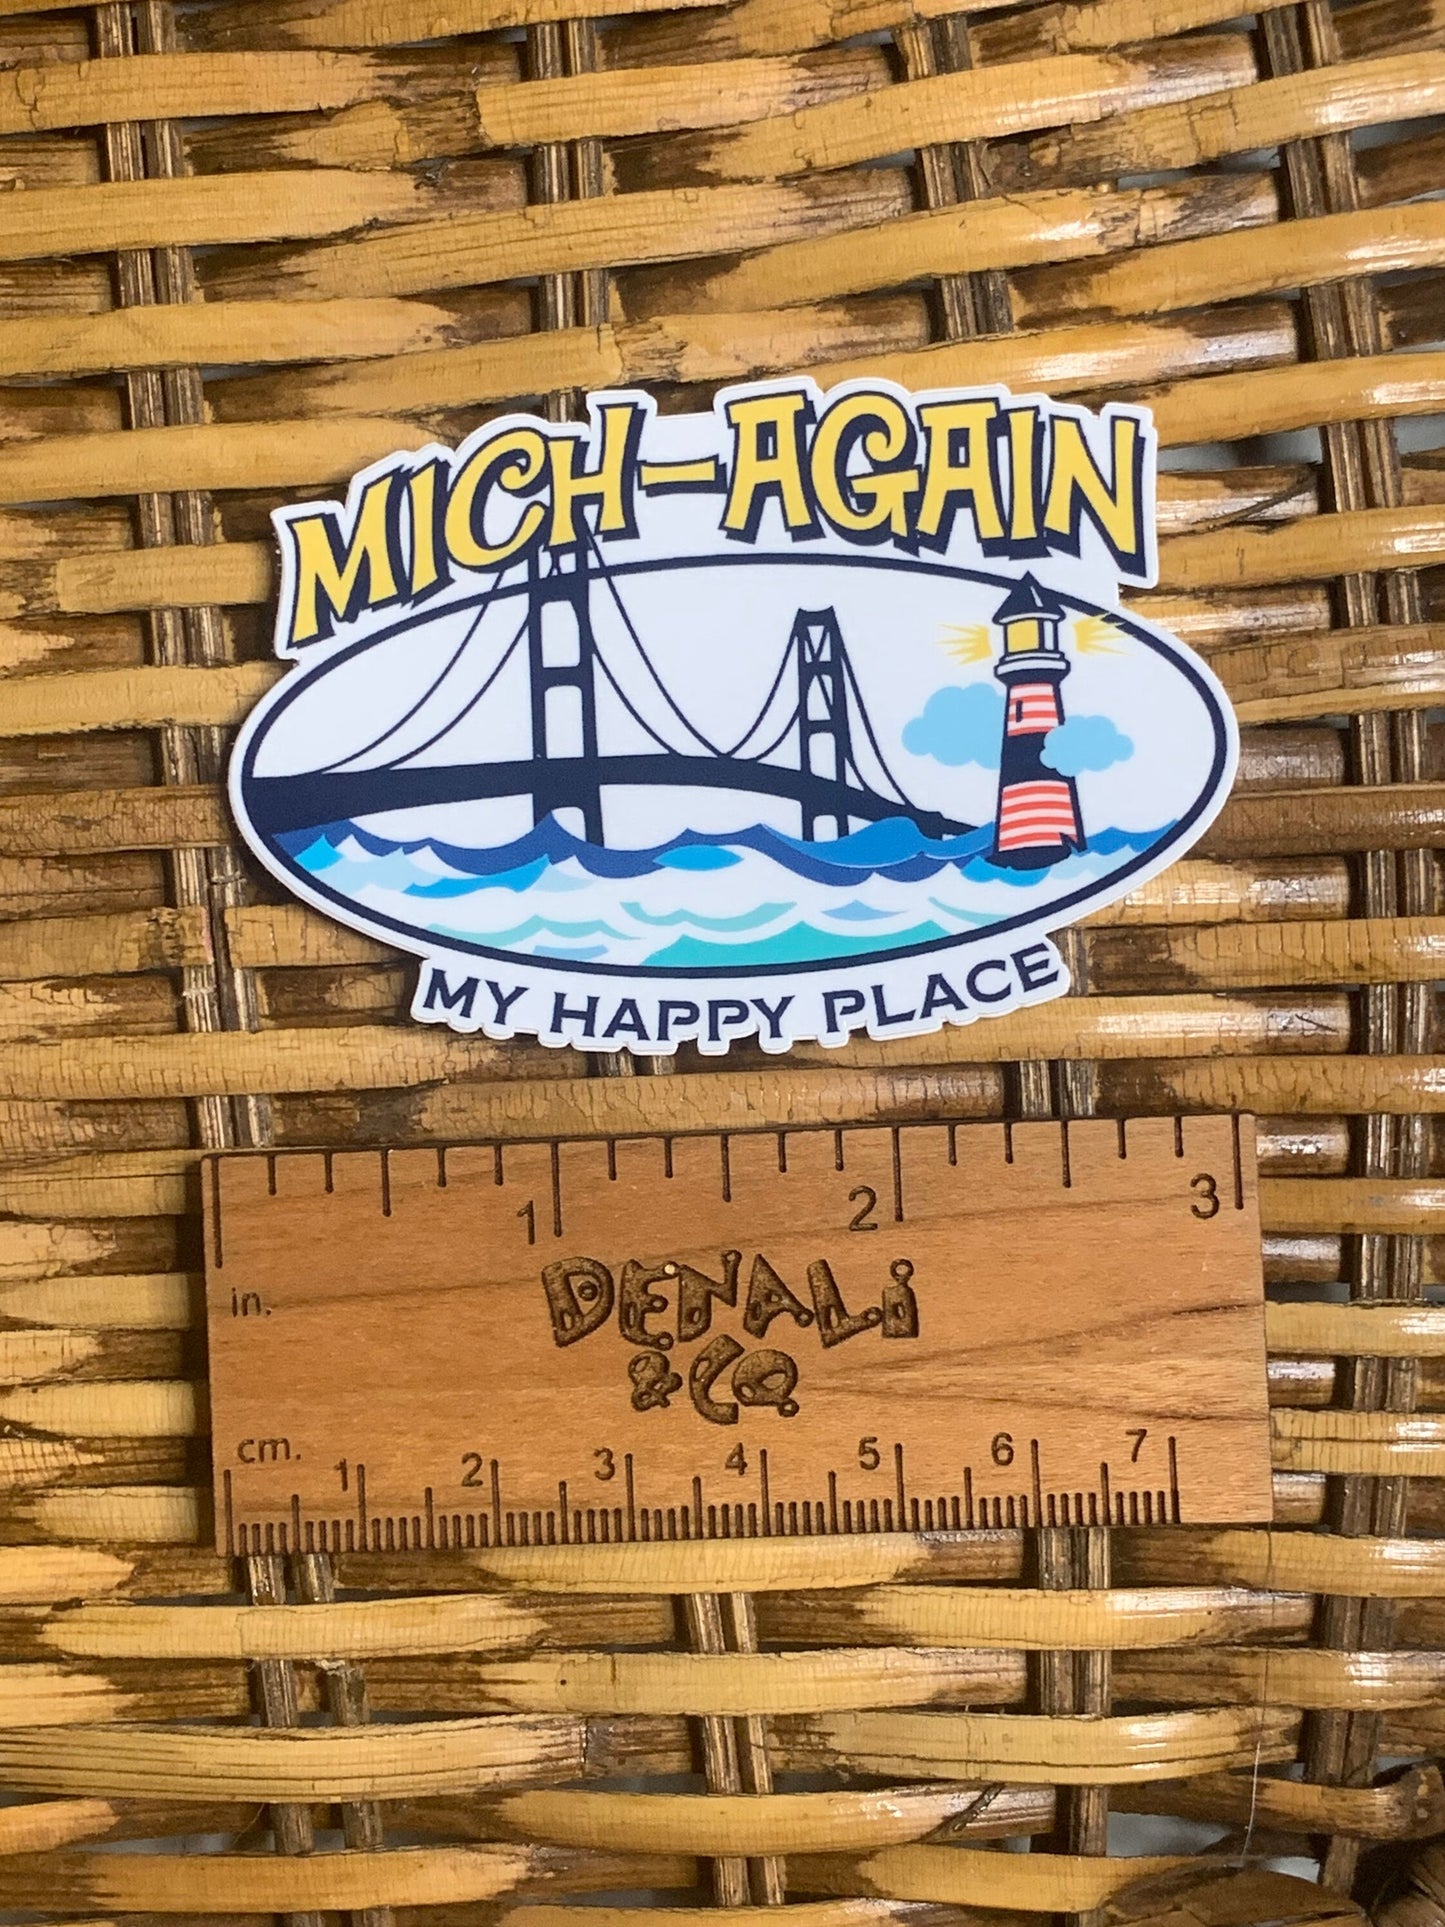 Mich-again My Happy Place Bridge Vinyl Sticker, Vinyl Decal, Laptop Sticker, Michigan Sticker, Michigan gift, Mackinac Bridge